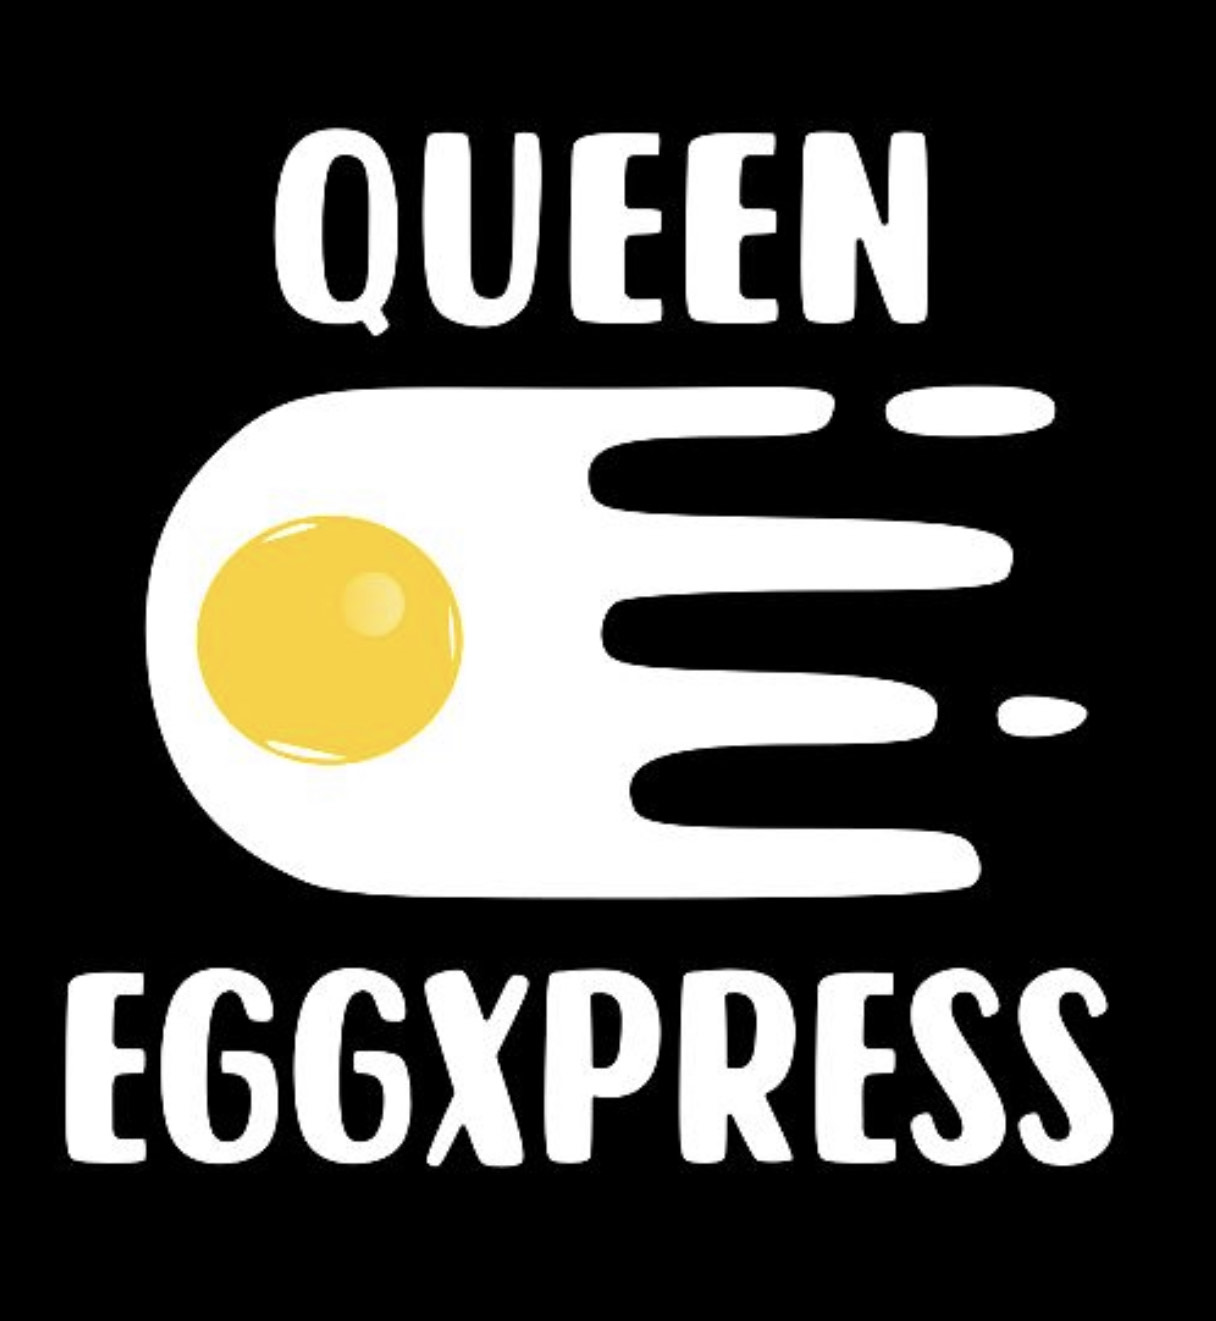 Queen EggXpress Logo 1